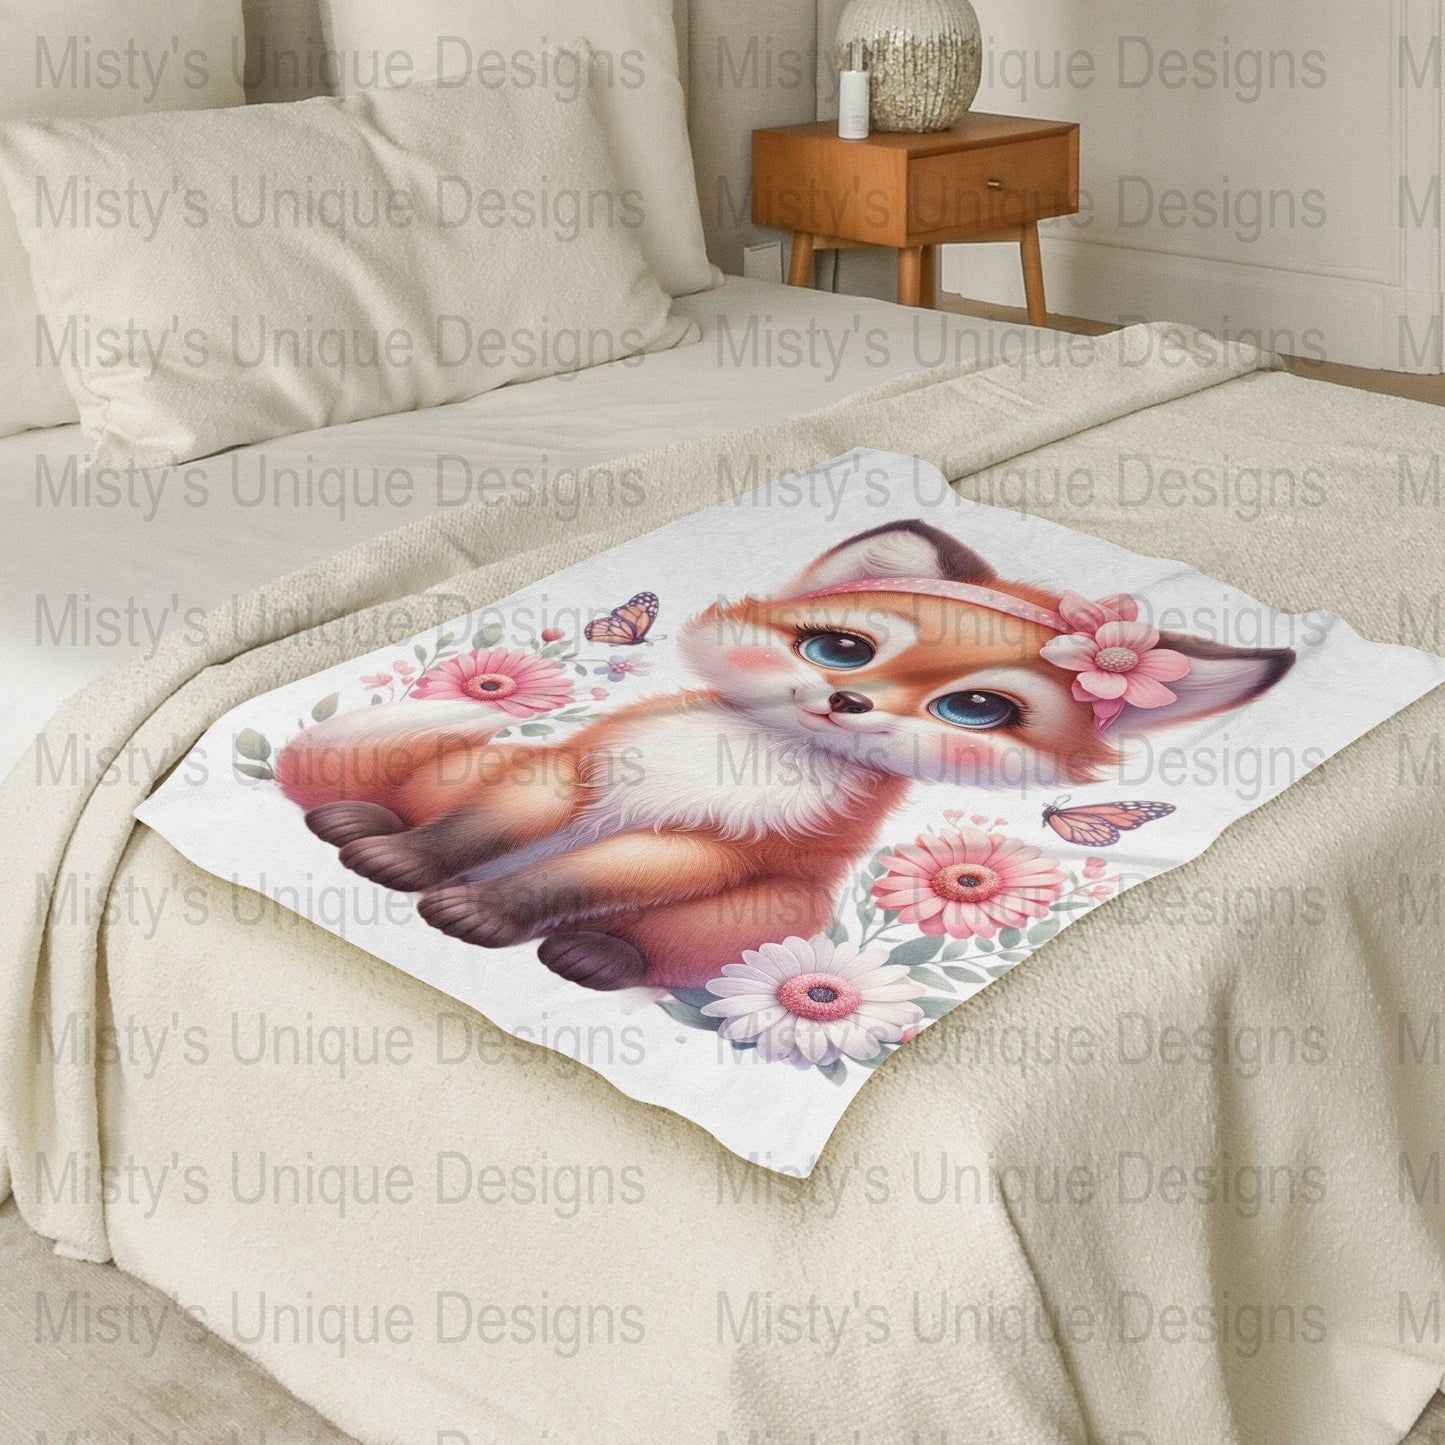 Cute Fox Clipart, Floral Woodland Animal PNG, Digital Download, Nursery Decor Art, Baby Shower Decoration, Girly Fox Illustration, Printable